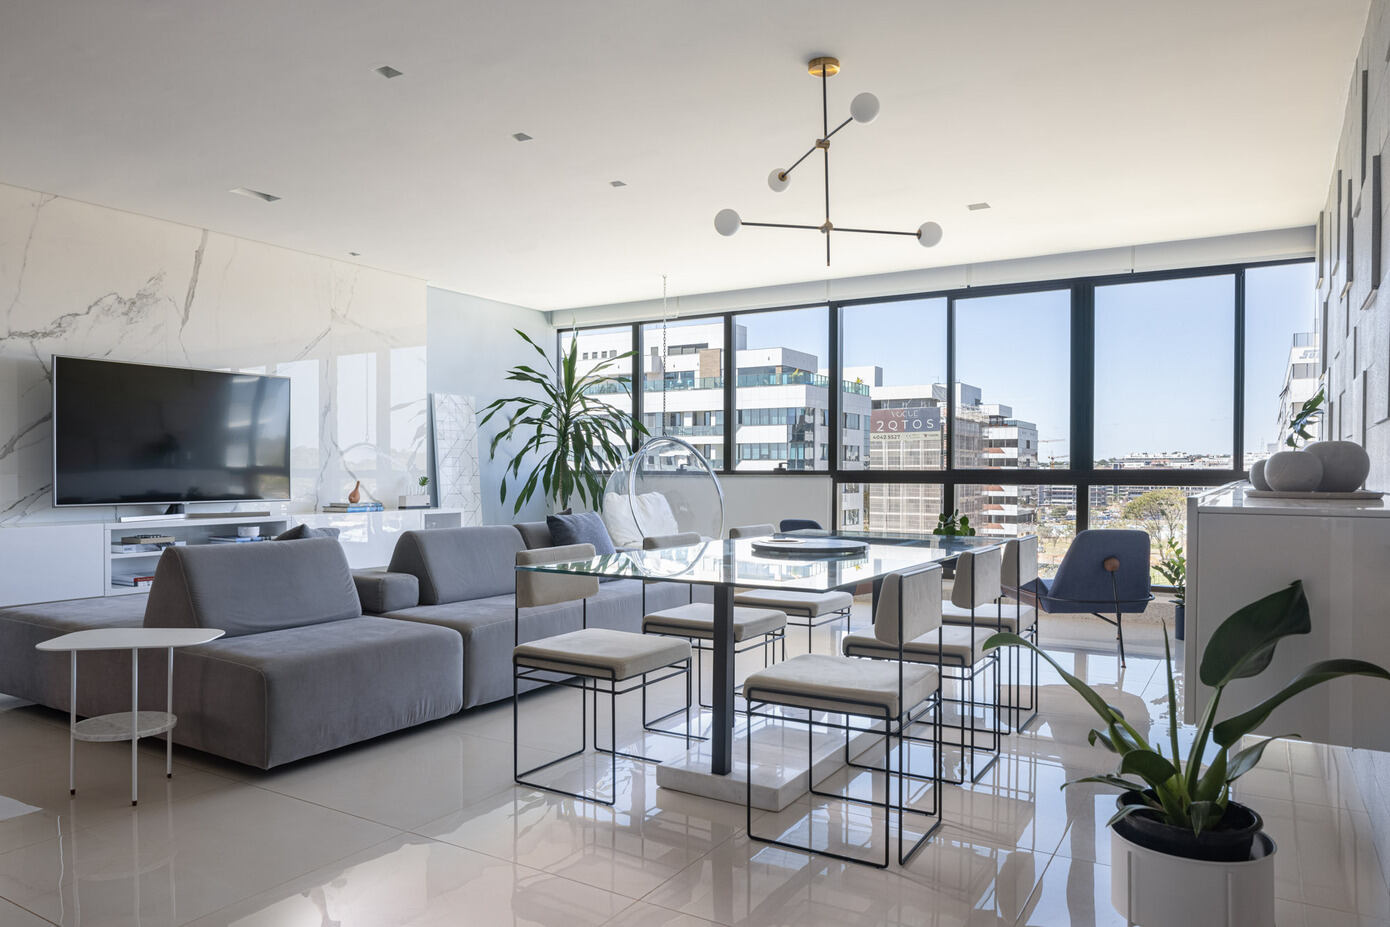 VITA Apartment: A Spacious and Comfortable Renovation in Brasília